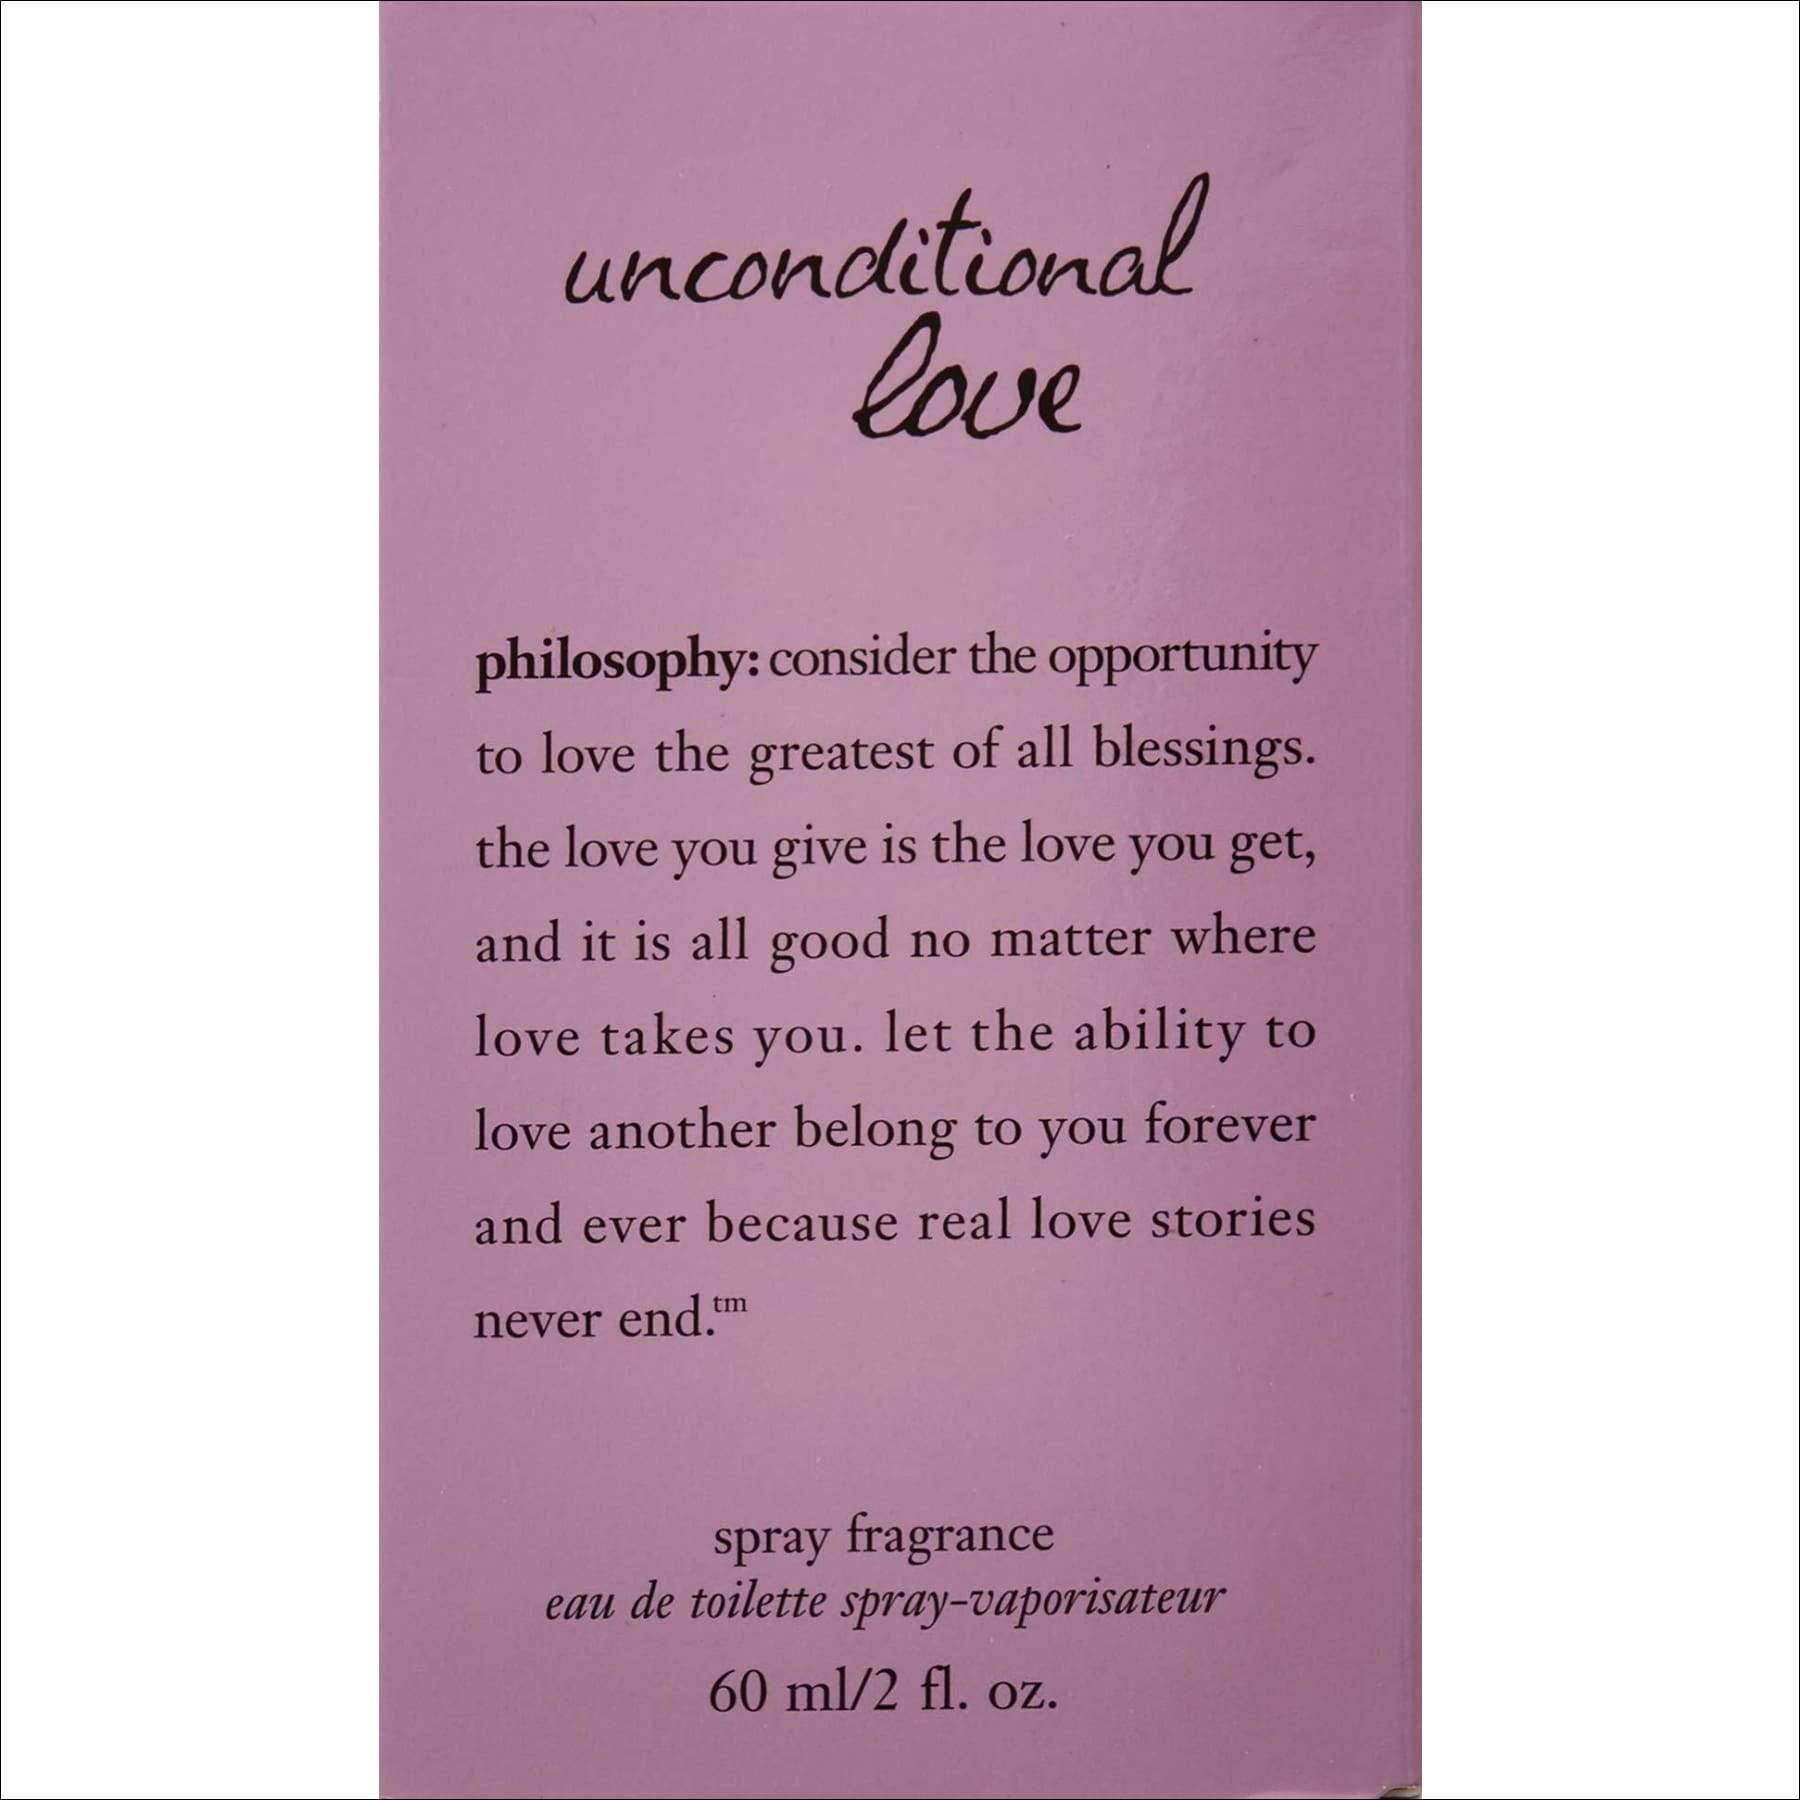 unconditional love philosophy